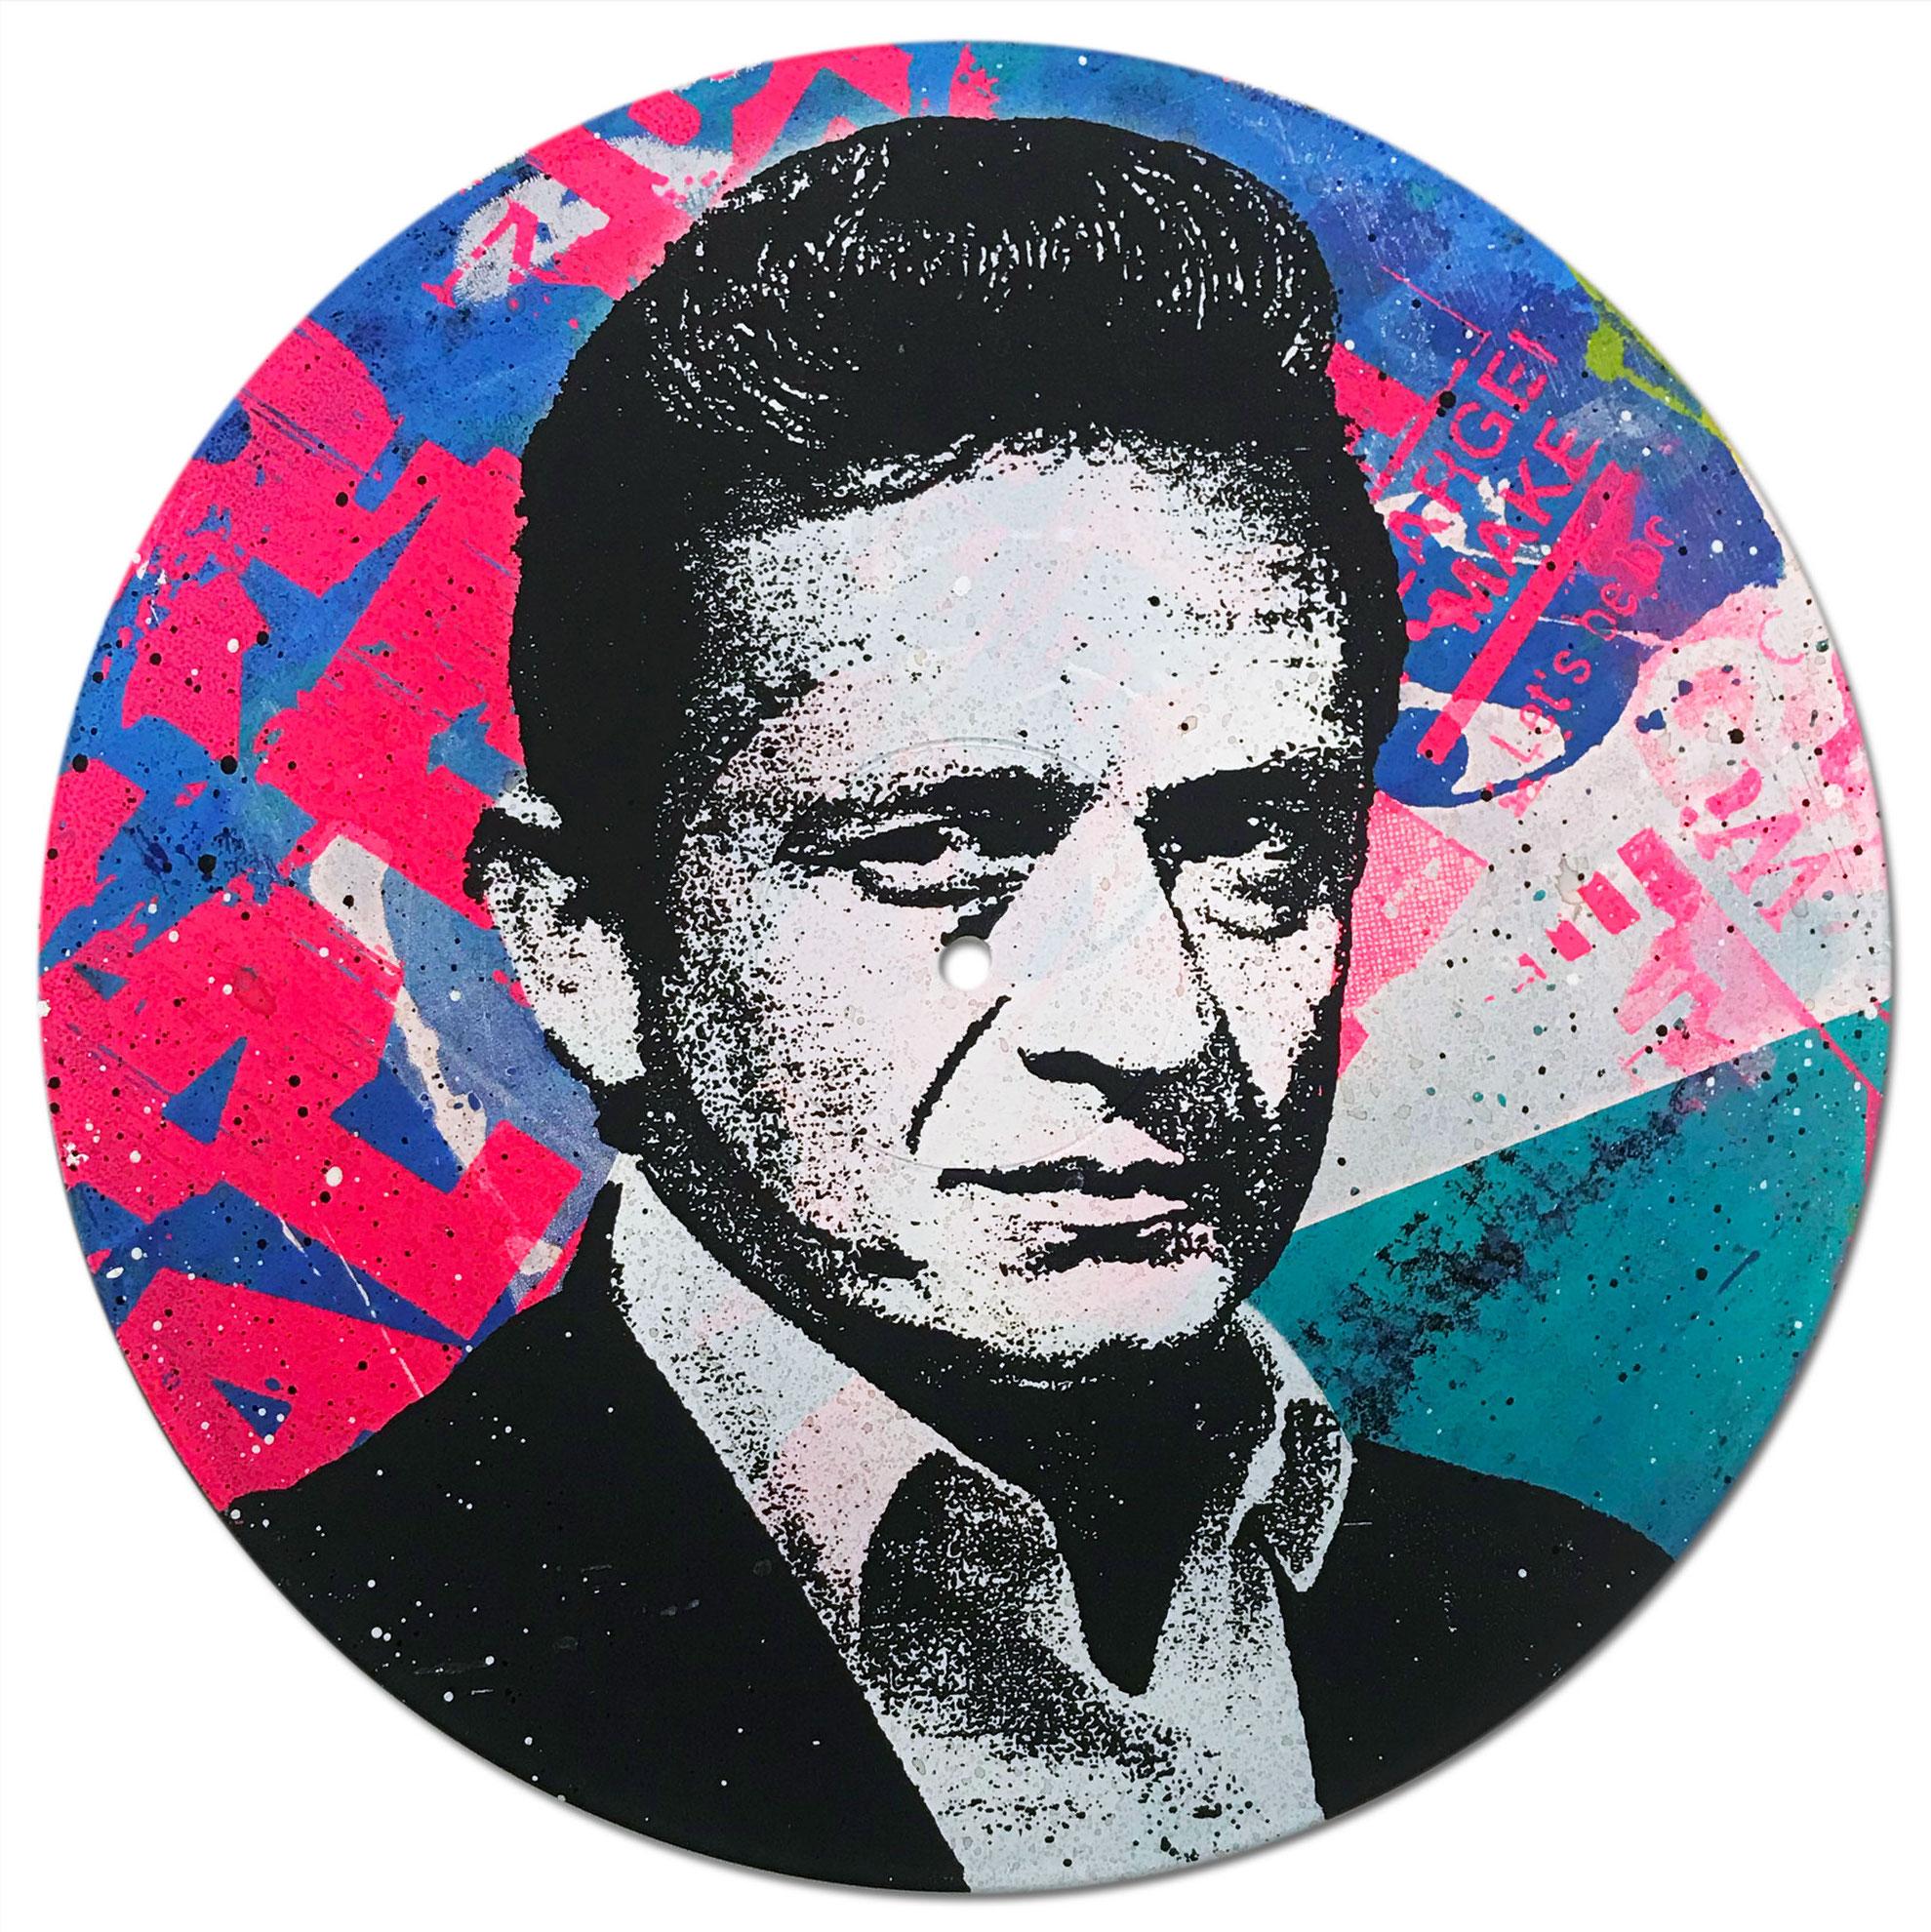 Johnny Cash Vinyl 1-10, Greg Gossel Pop Art LP Record (Singles & Sets Available) For Sale 2